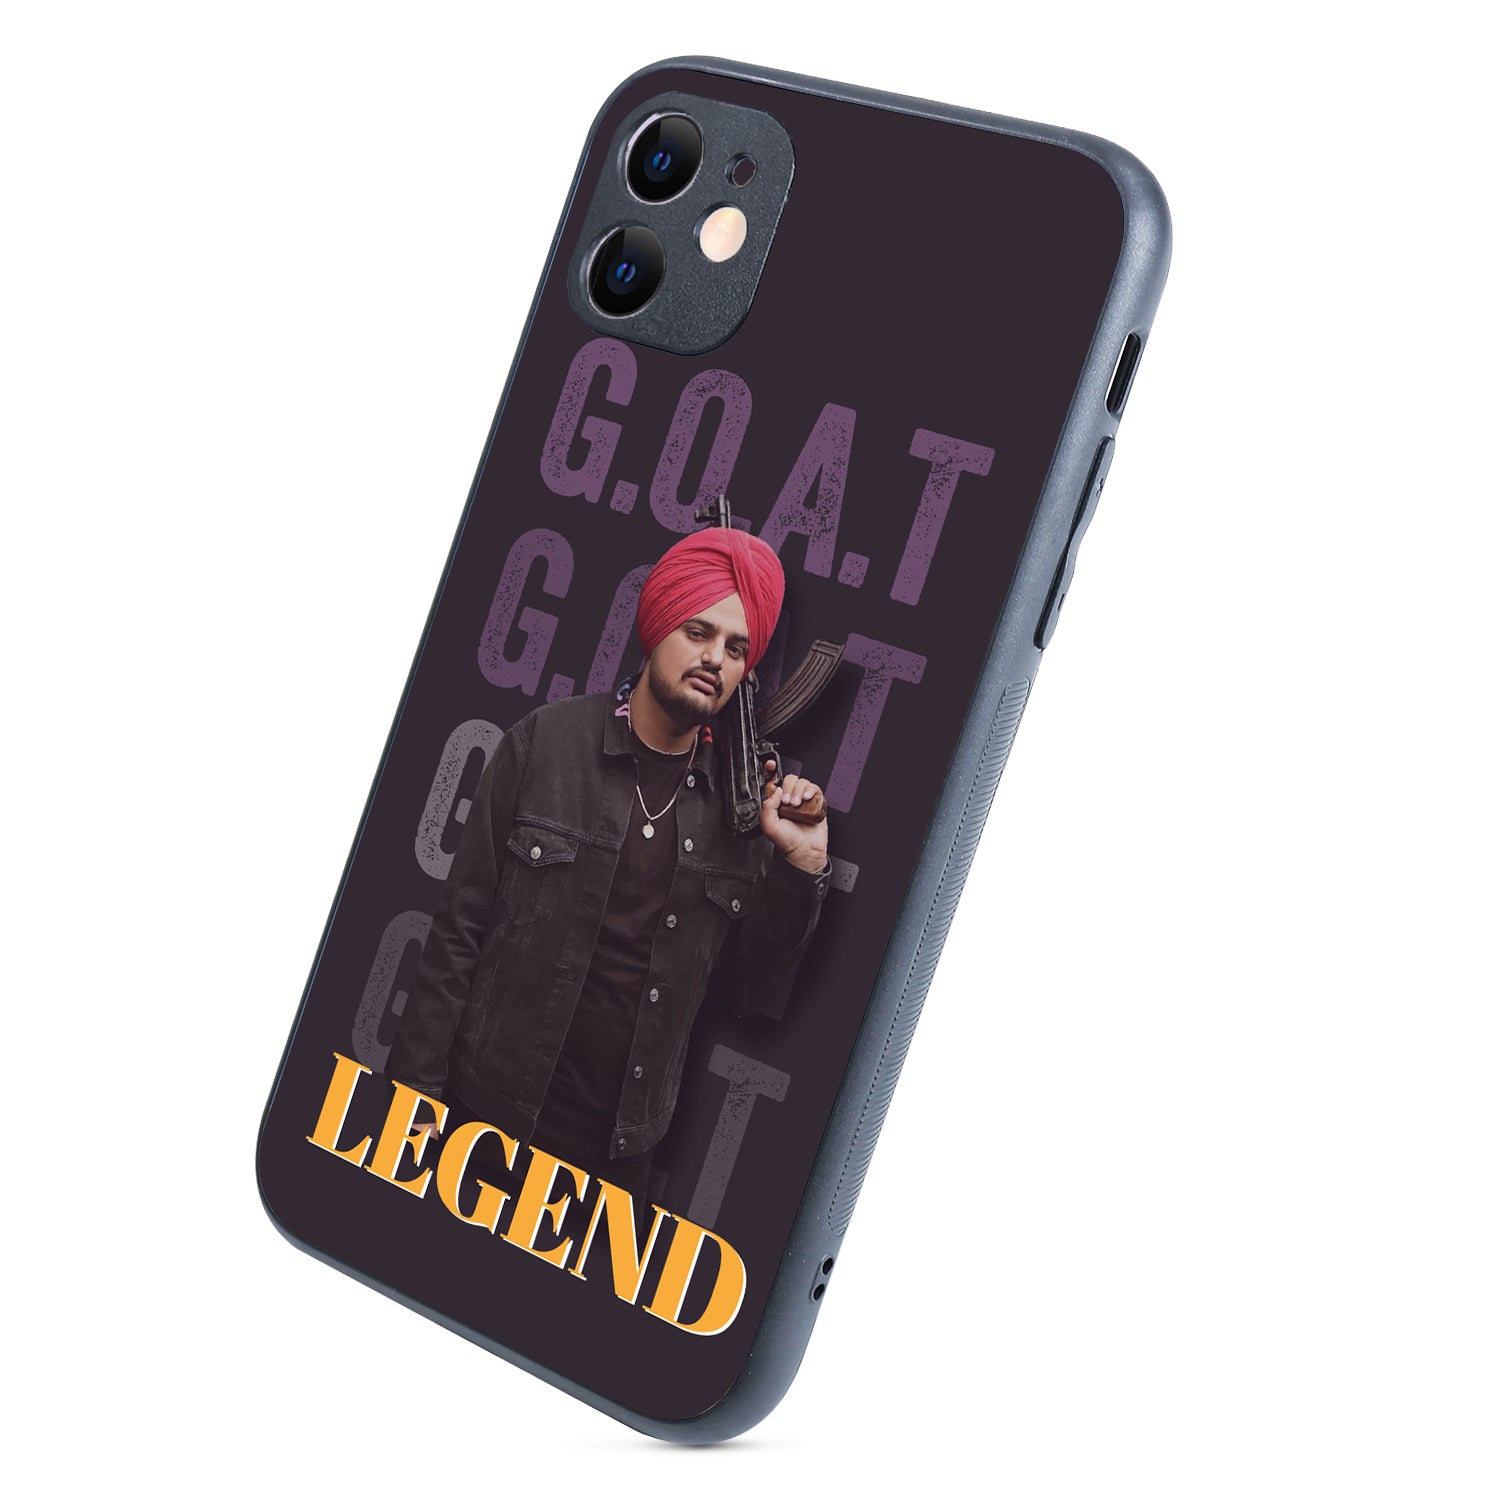 Legend Sidhu Moosewala iPhone 11 Case